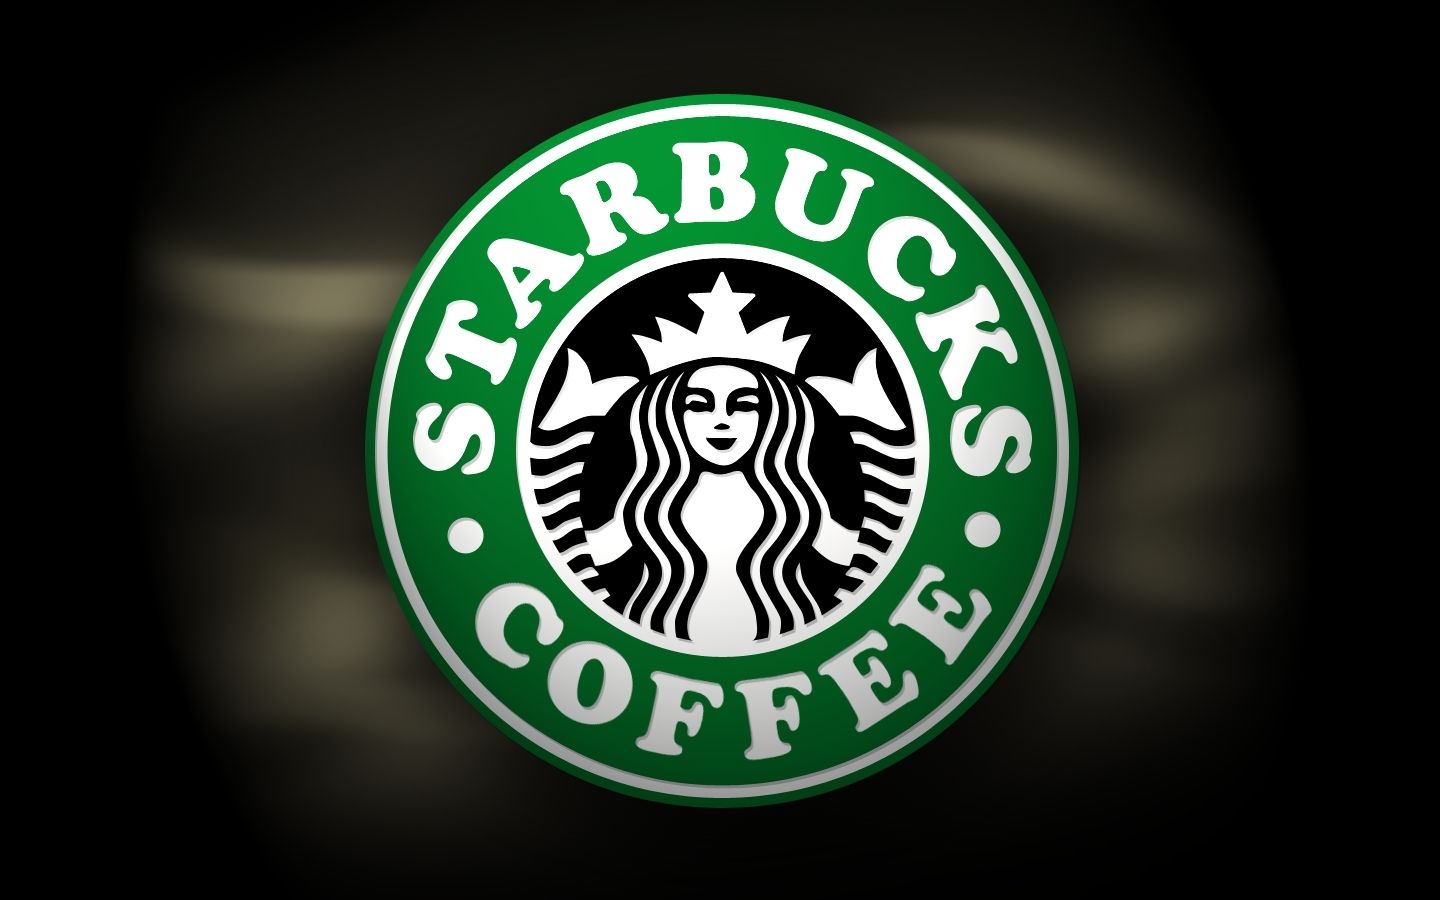 Starbucks Logo Wallpaper - Starbucks Wallpaper 3208054 - Fanpop